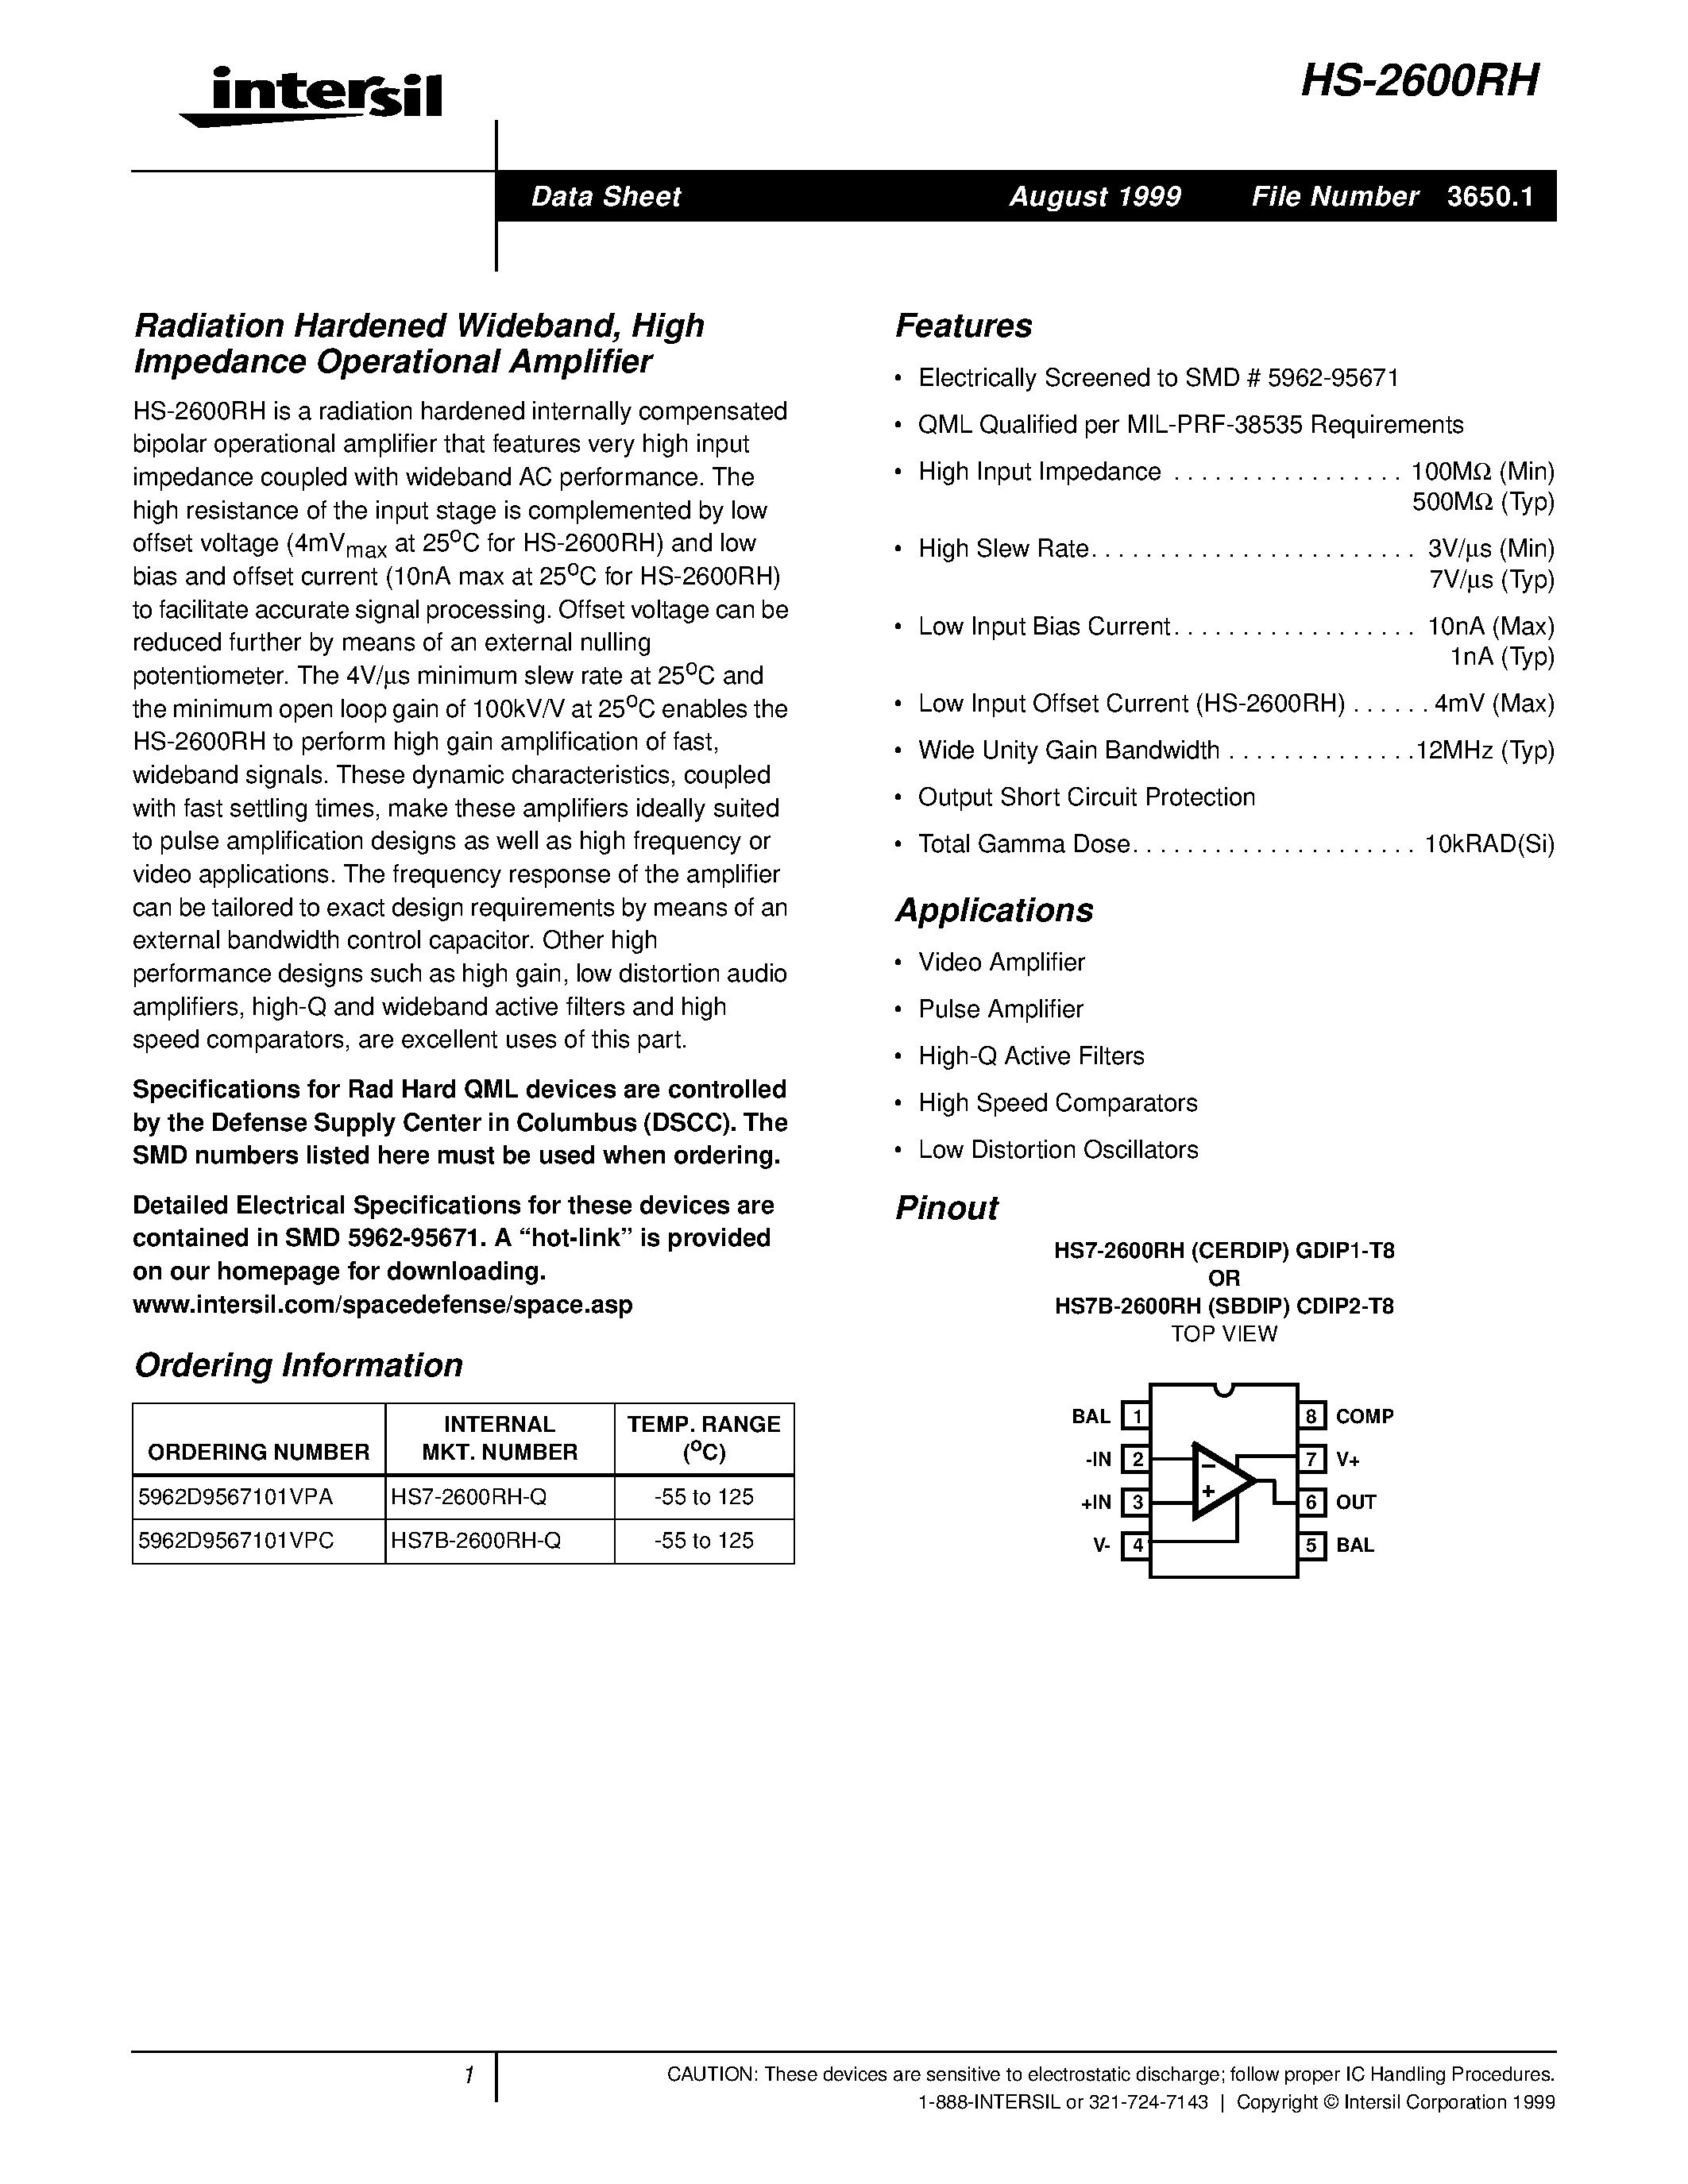 Datasheet HS7B-2600RH-Q - Radiation Hardened Wideband/ High Impedance Operational Amplifier page 1